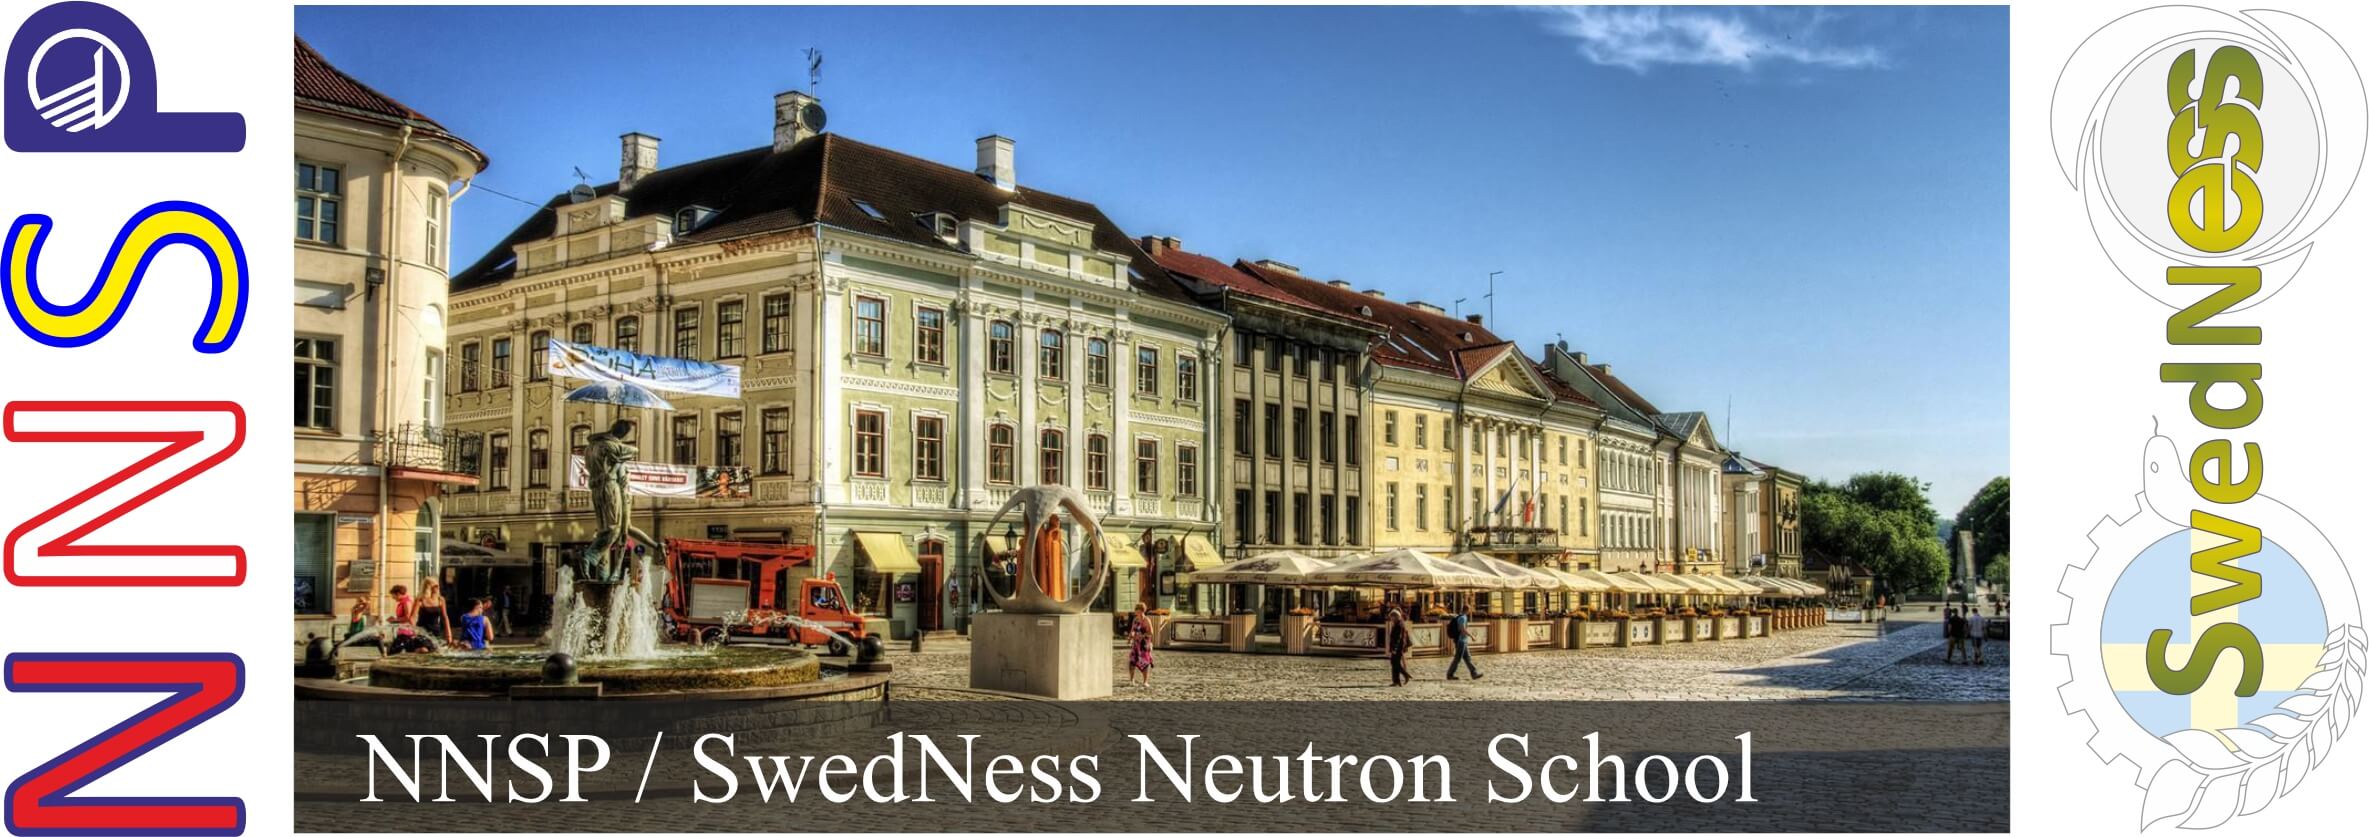 NNSP/SWEDNESS school